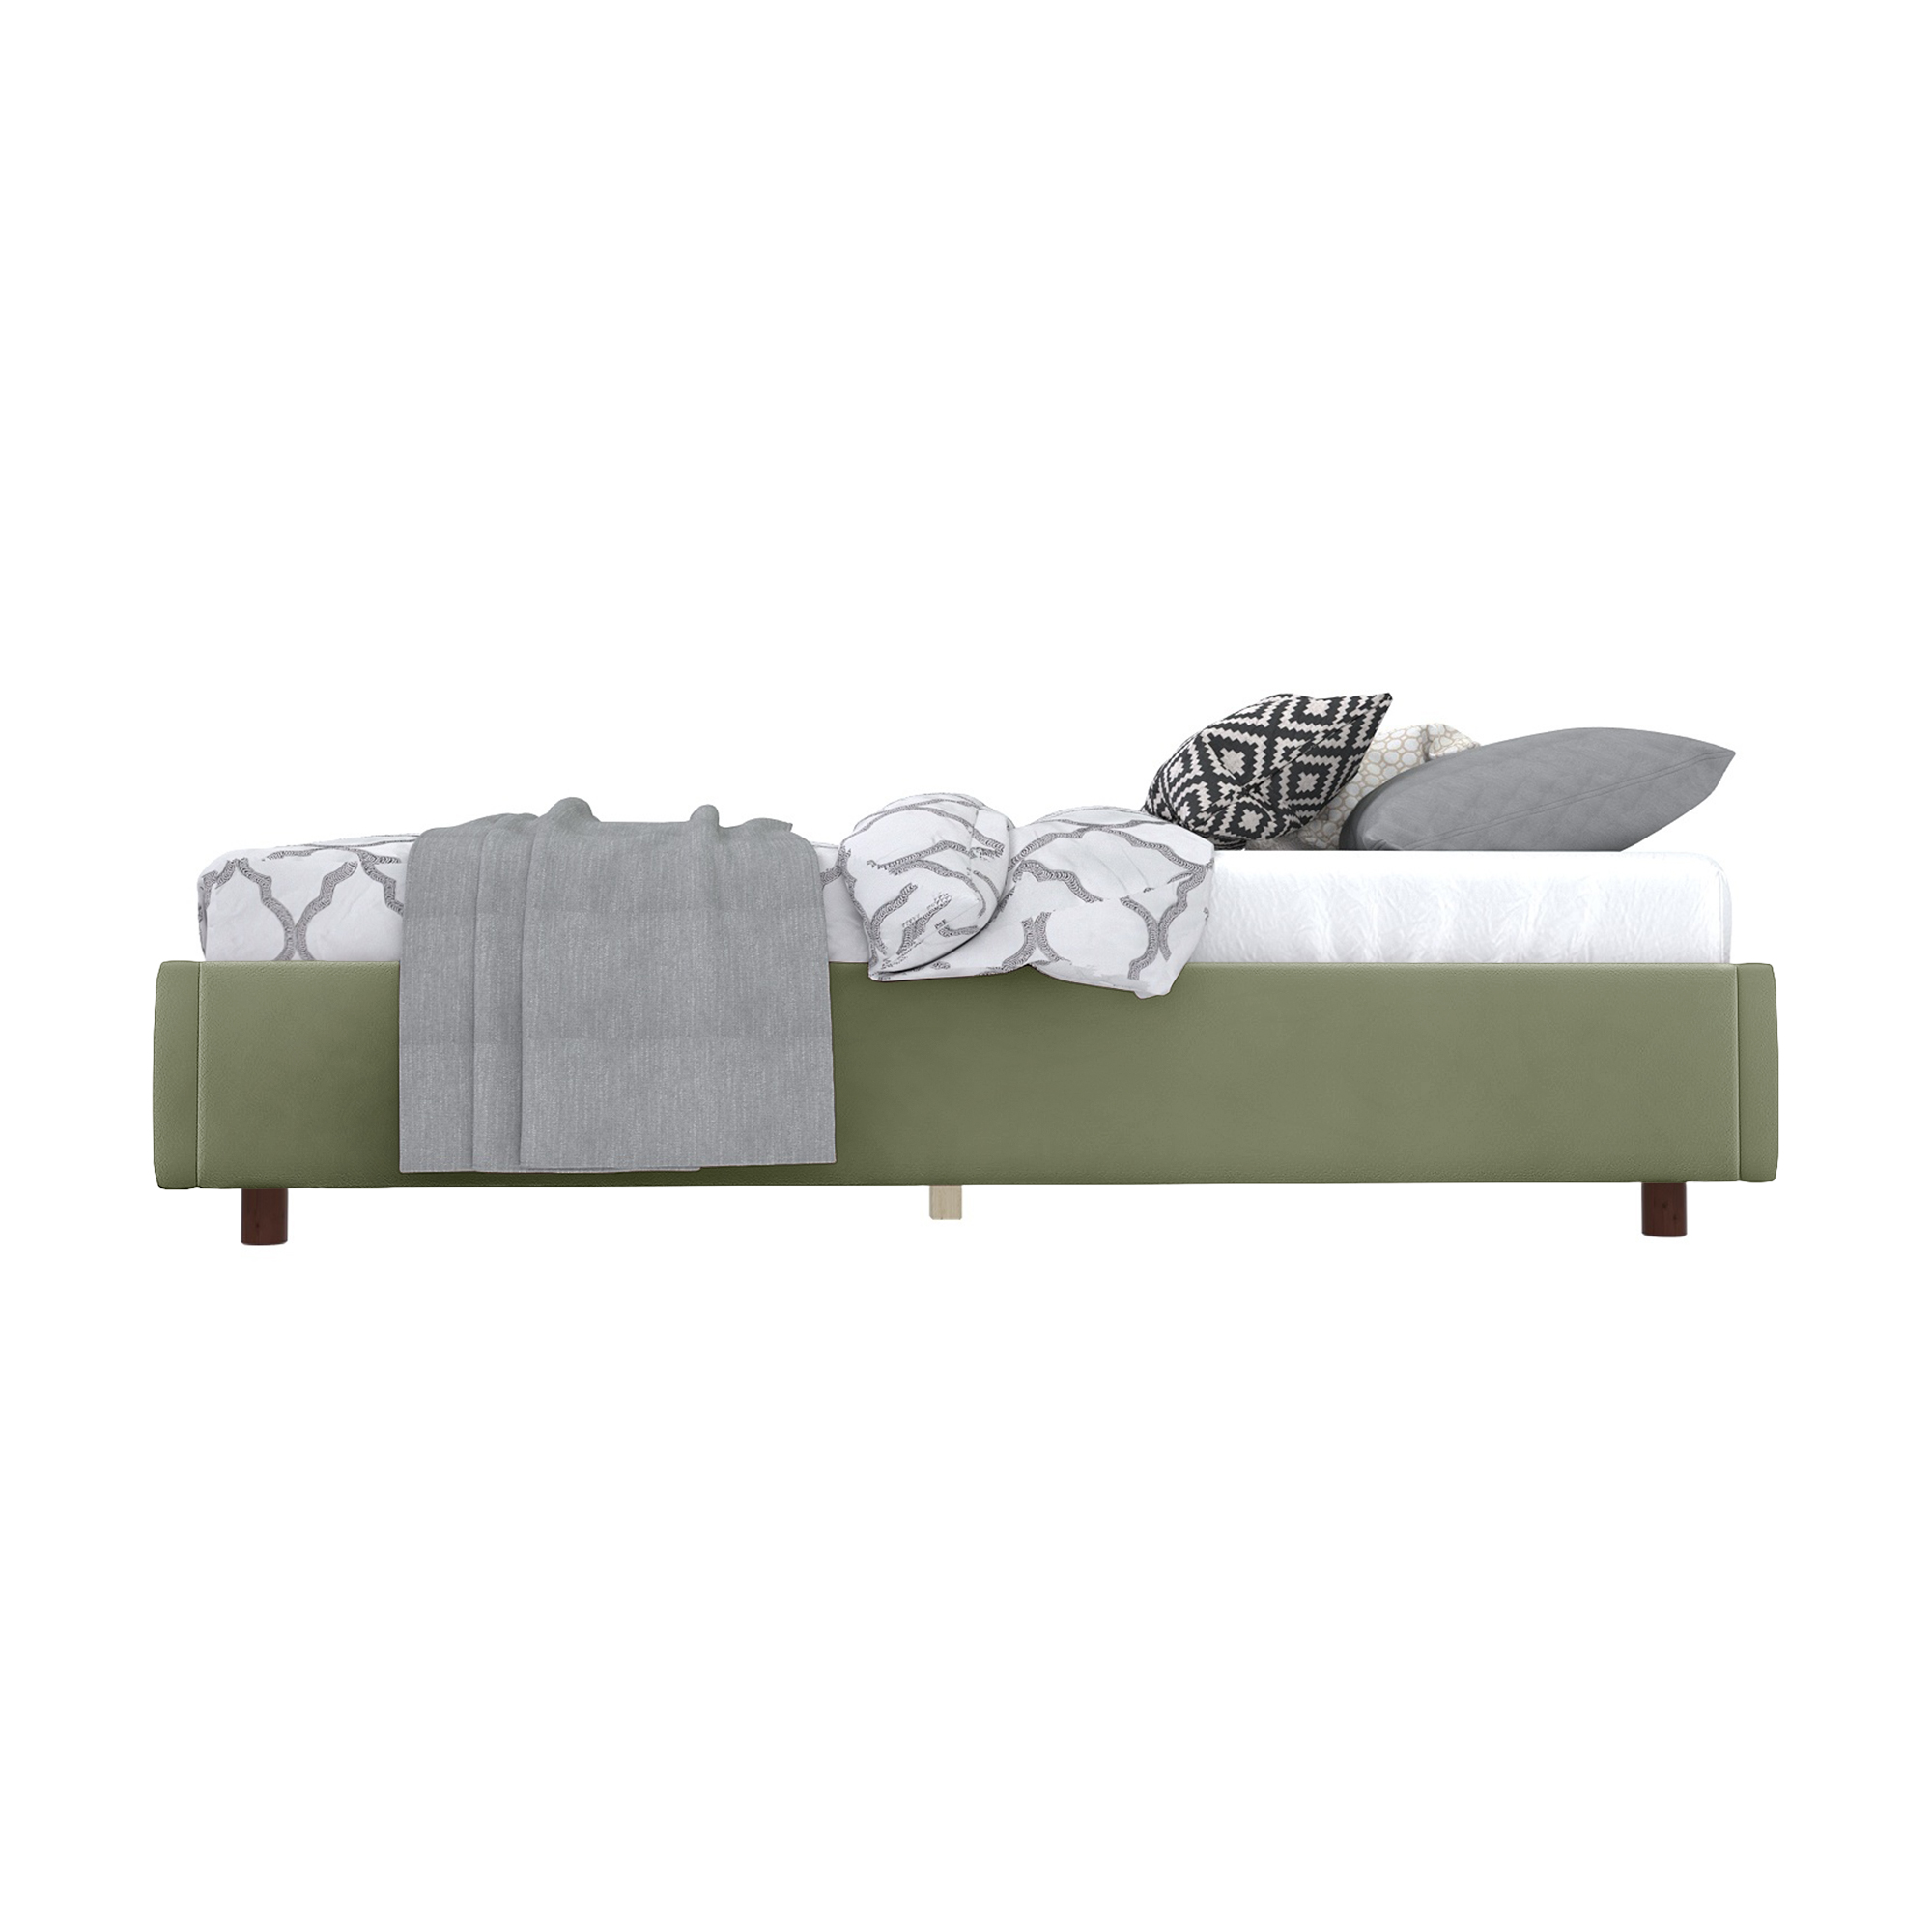 Кровать AS Саманта 160x200 орех/грасс, цвет зеленый, размер 200х160х30 - фото 5